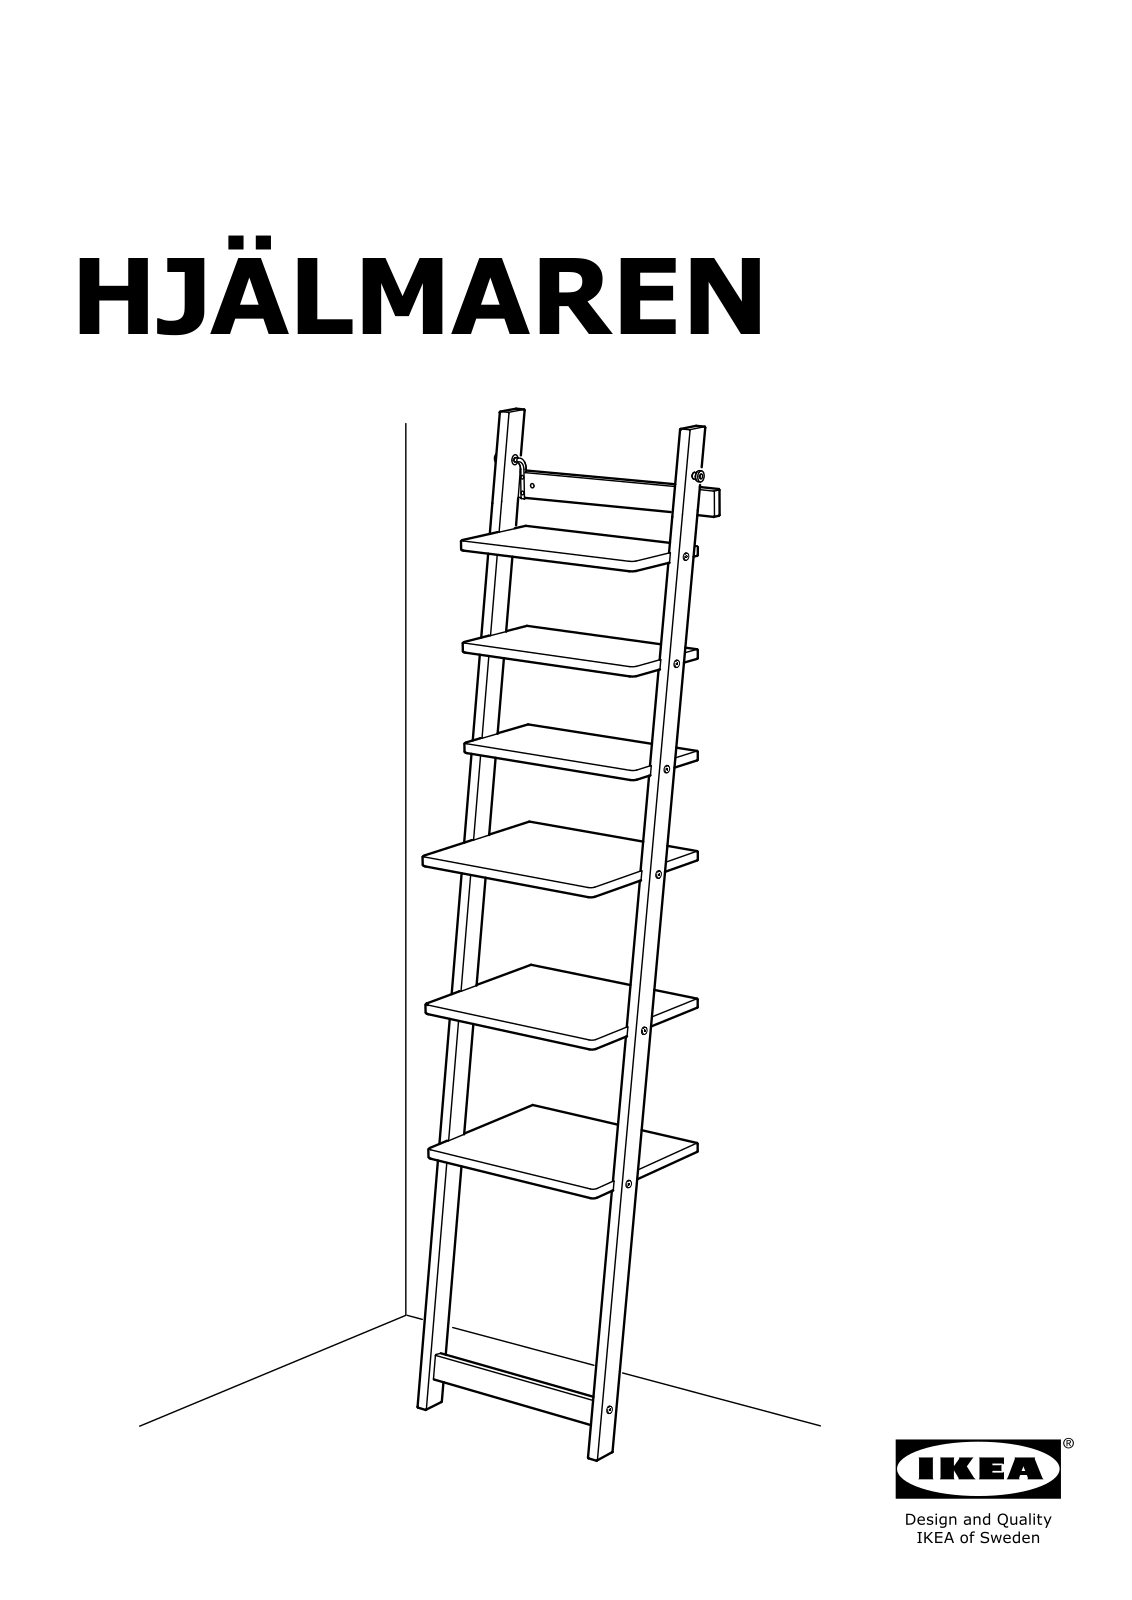 IKEA HJÄLMAREN Wall shelf User Manual